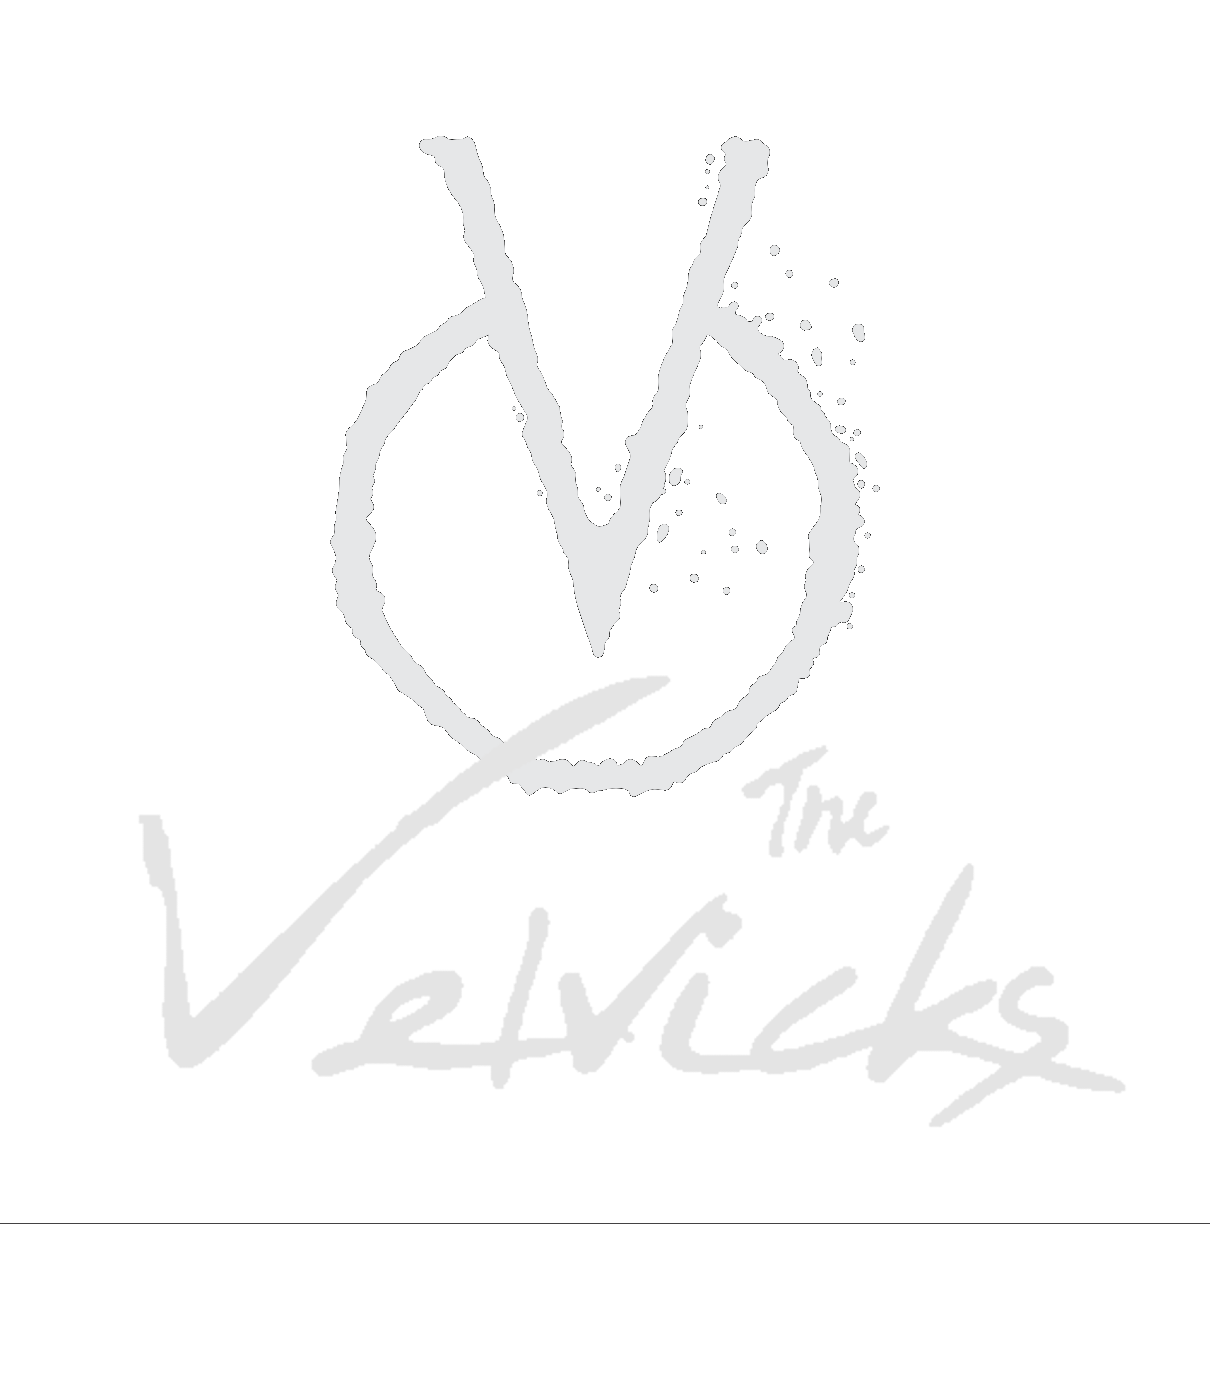 The Velvicks